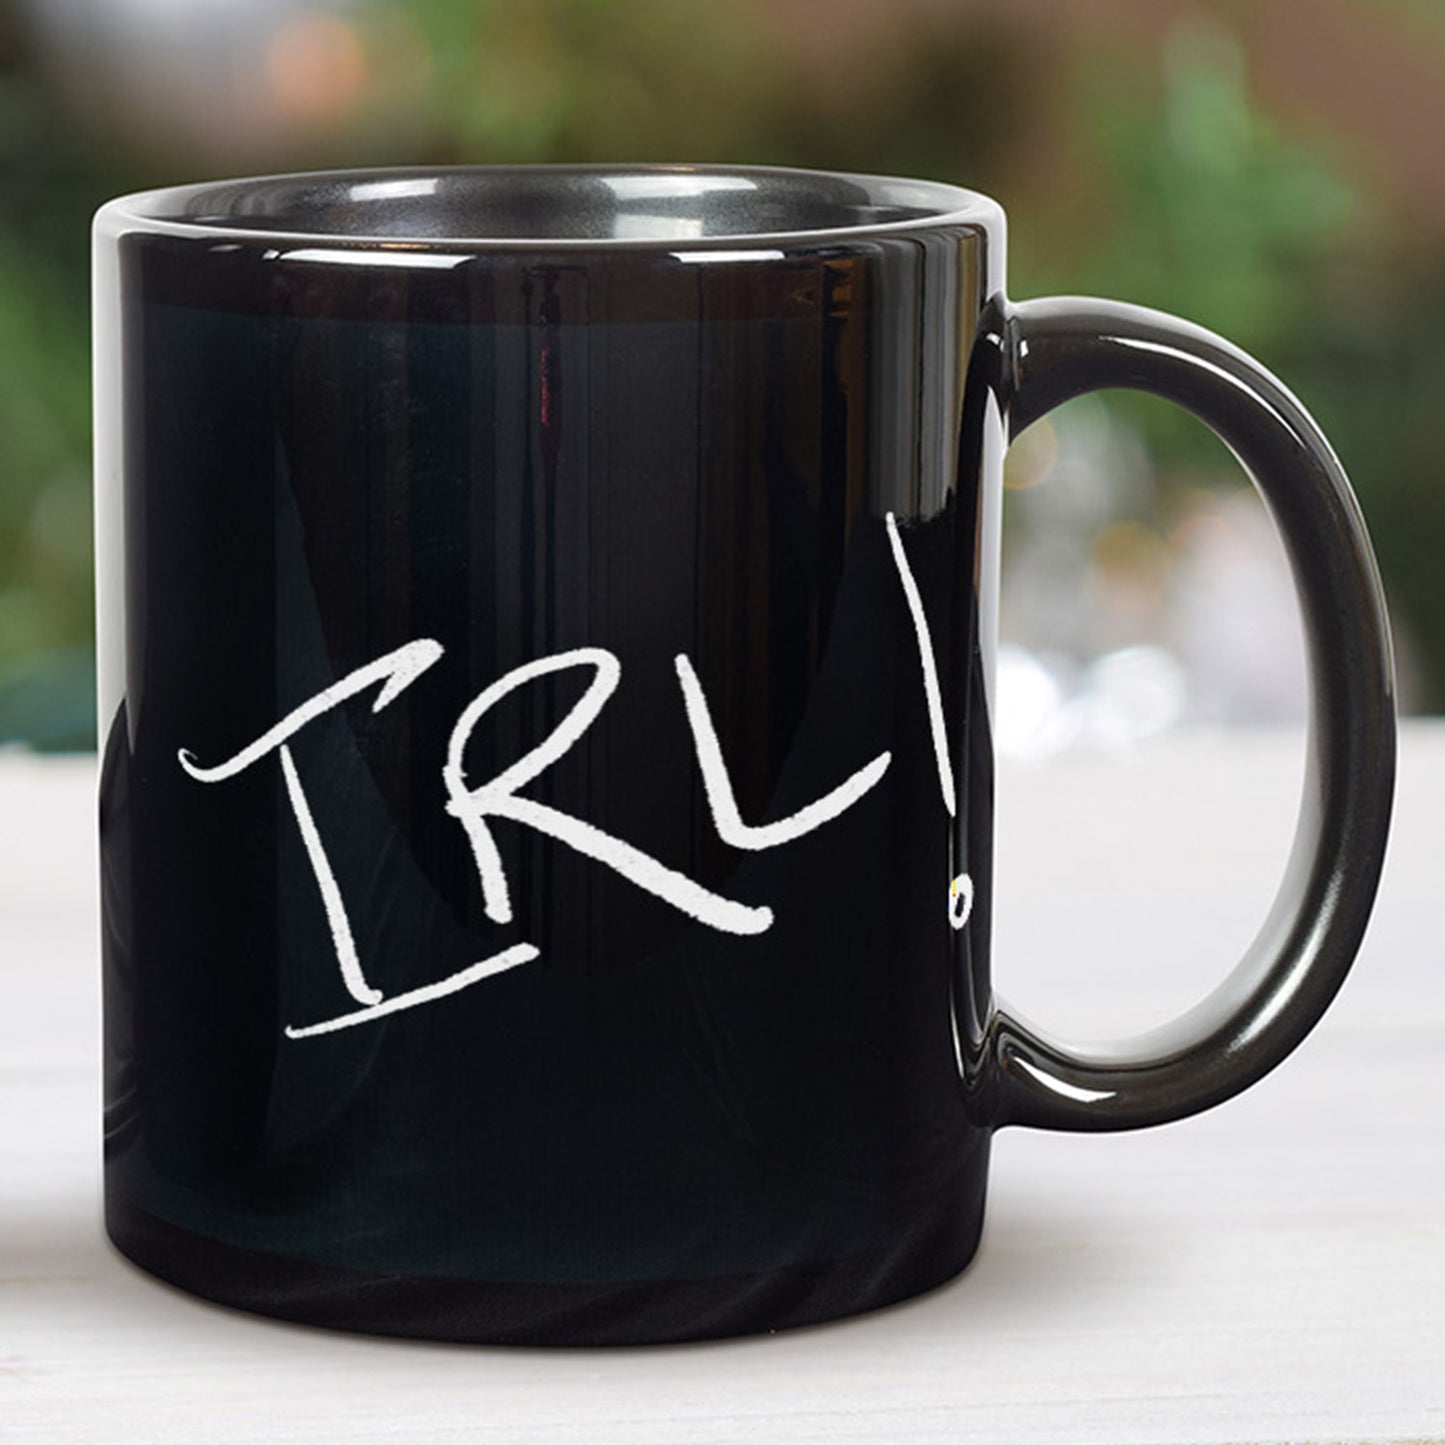 IRL Noir Essence Coffee Mug